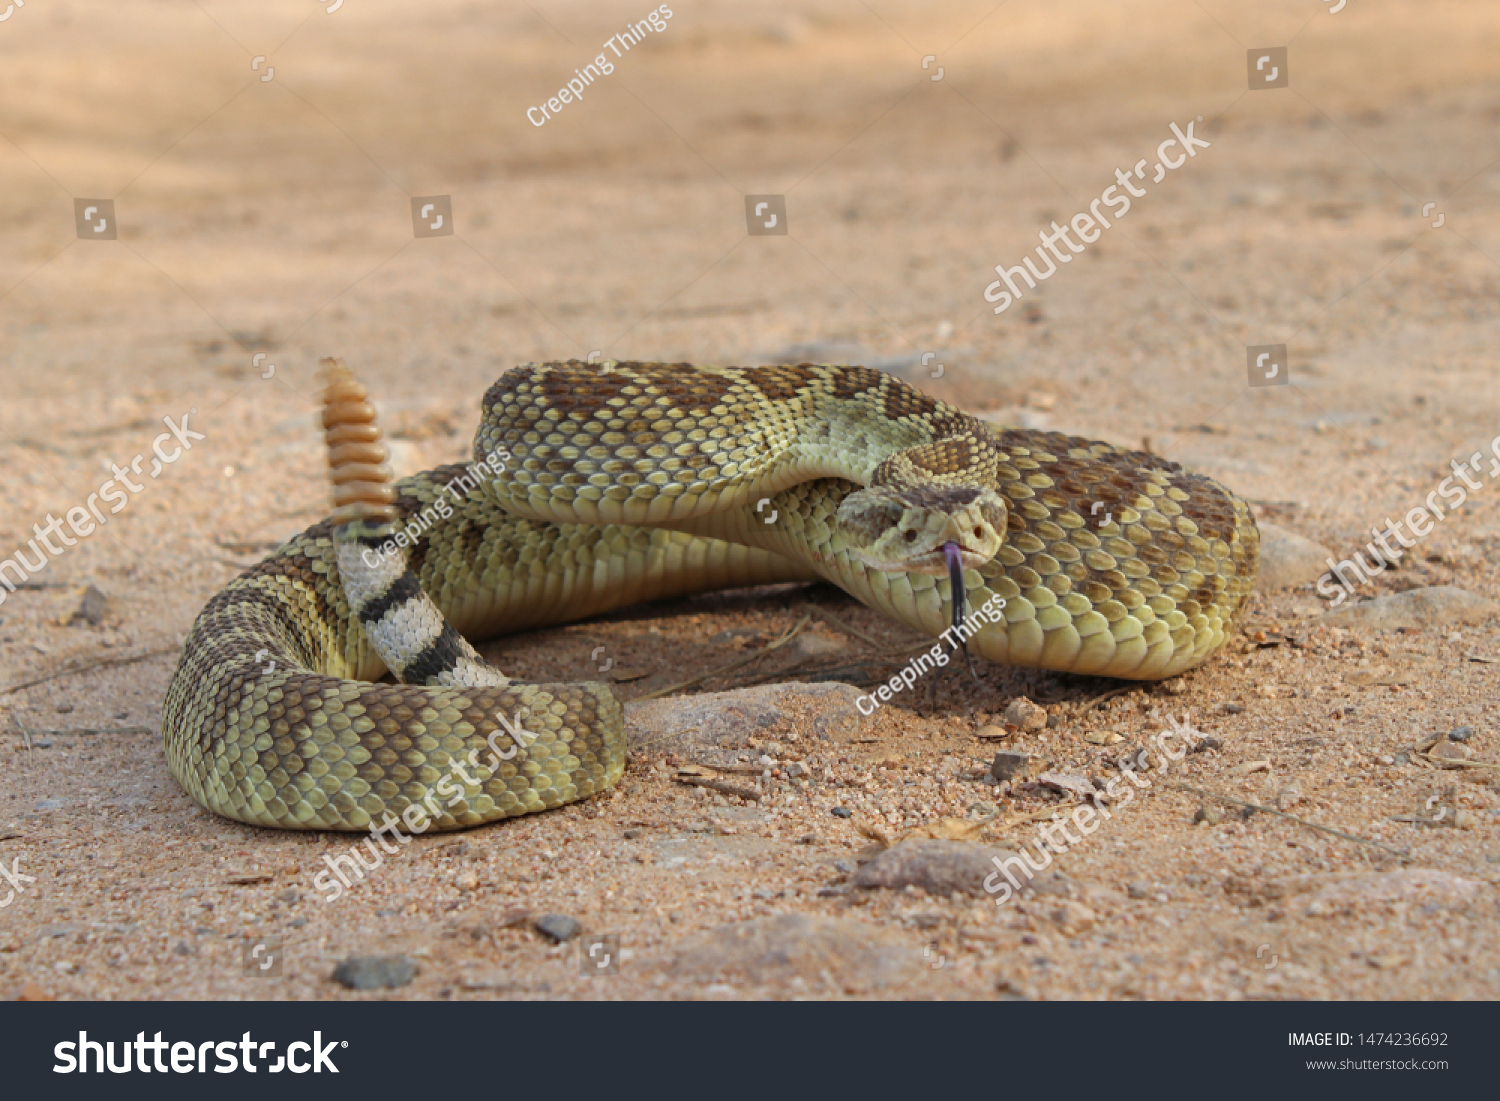 Mojave Rattlesnake in Arizona (Crotalus scutulatus) #1474236692